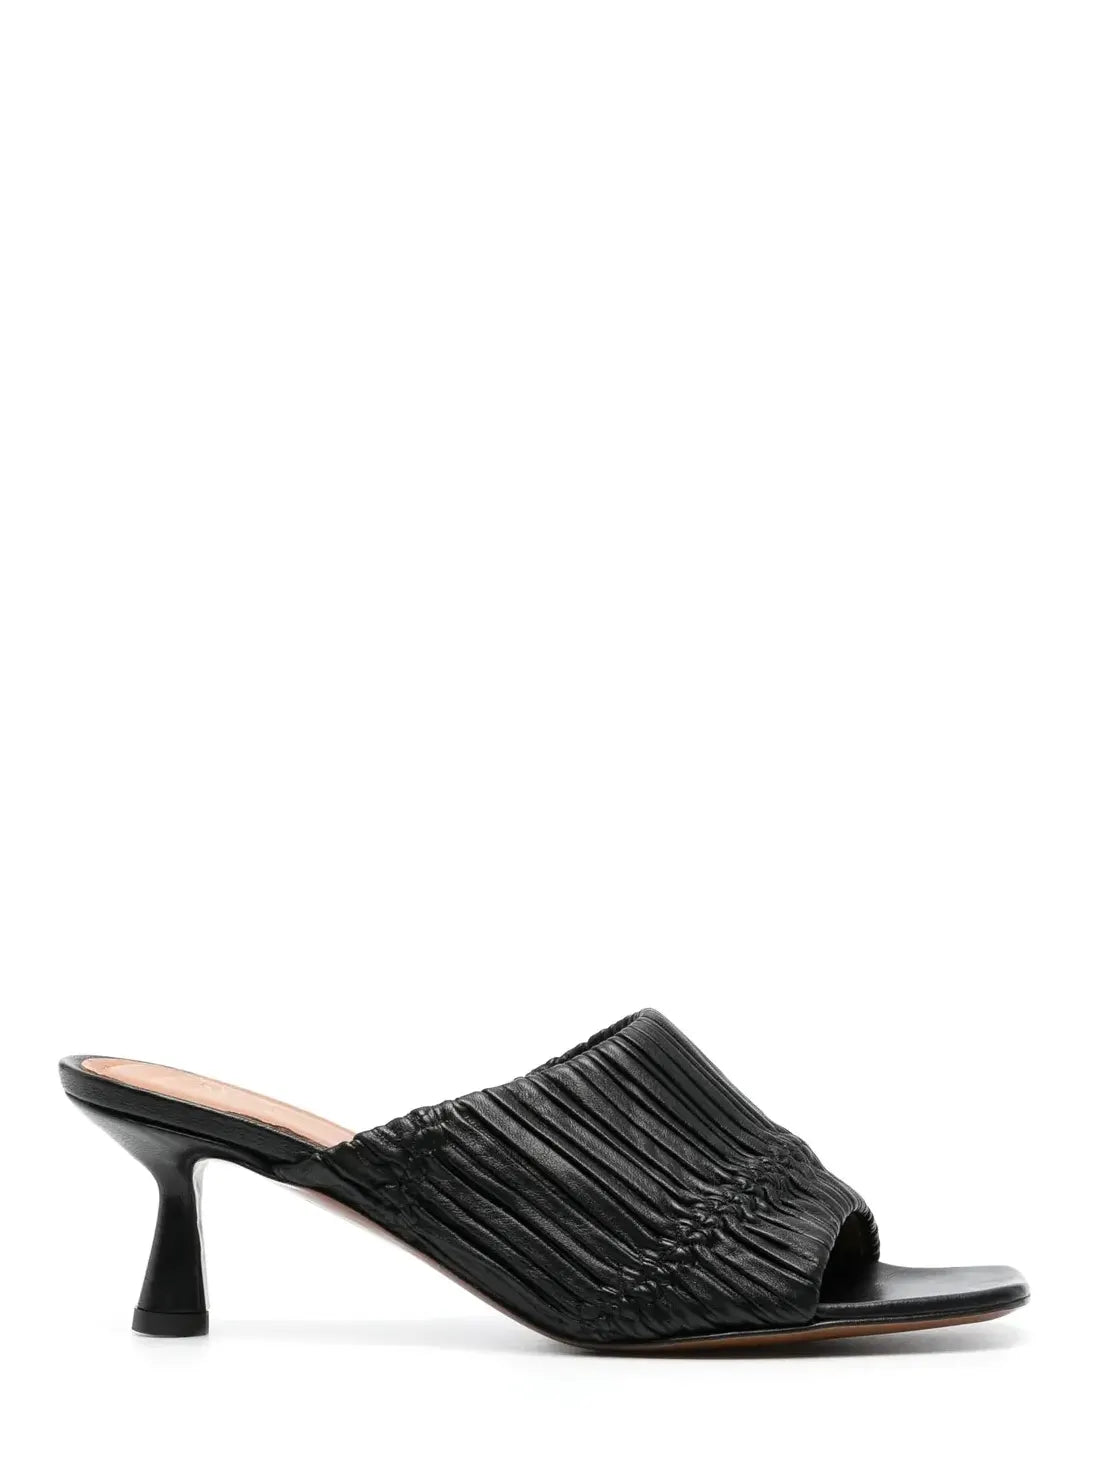 Caserta square-toe leather mules, black